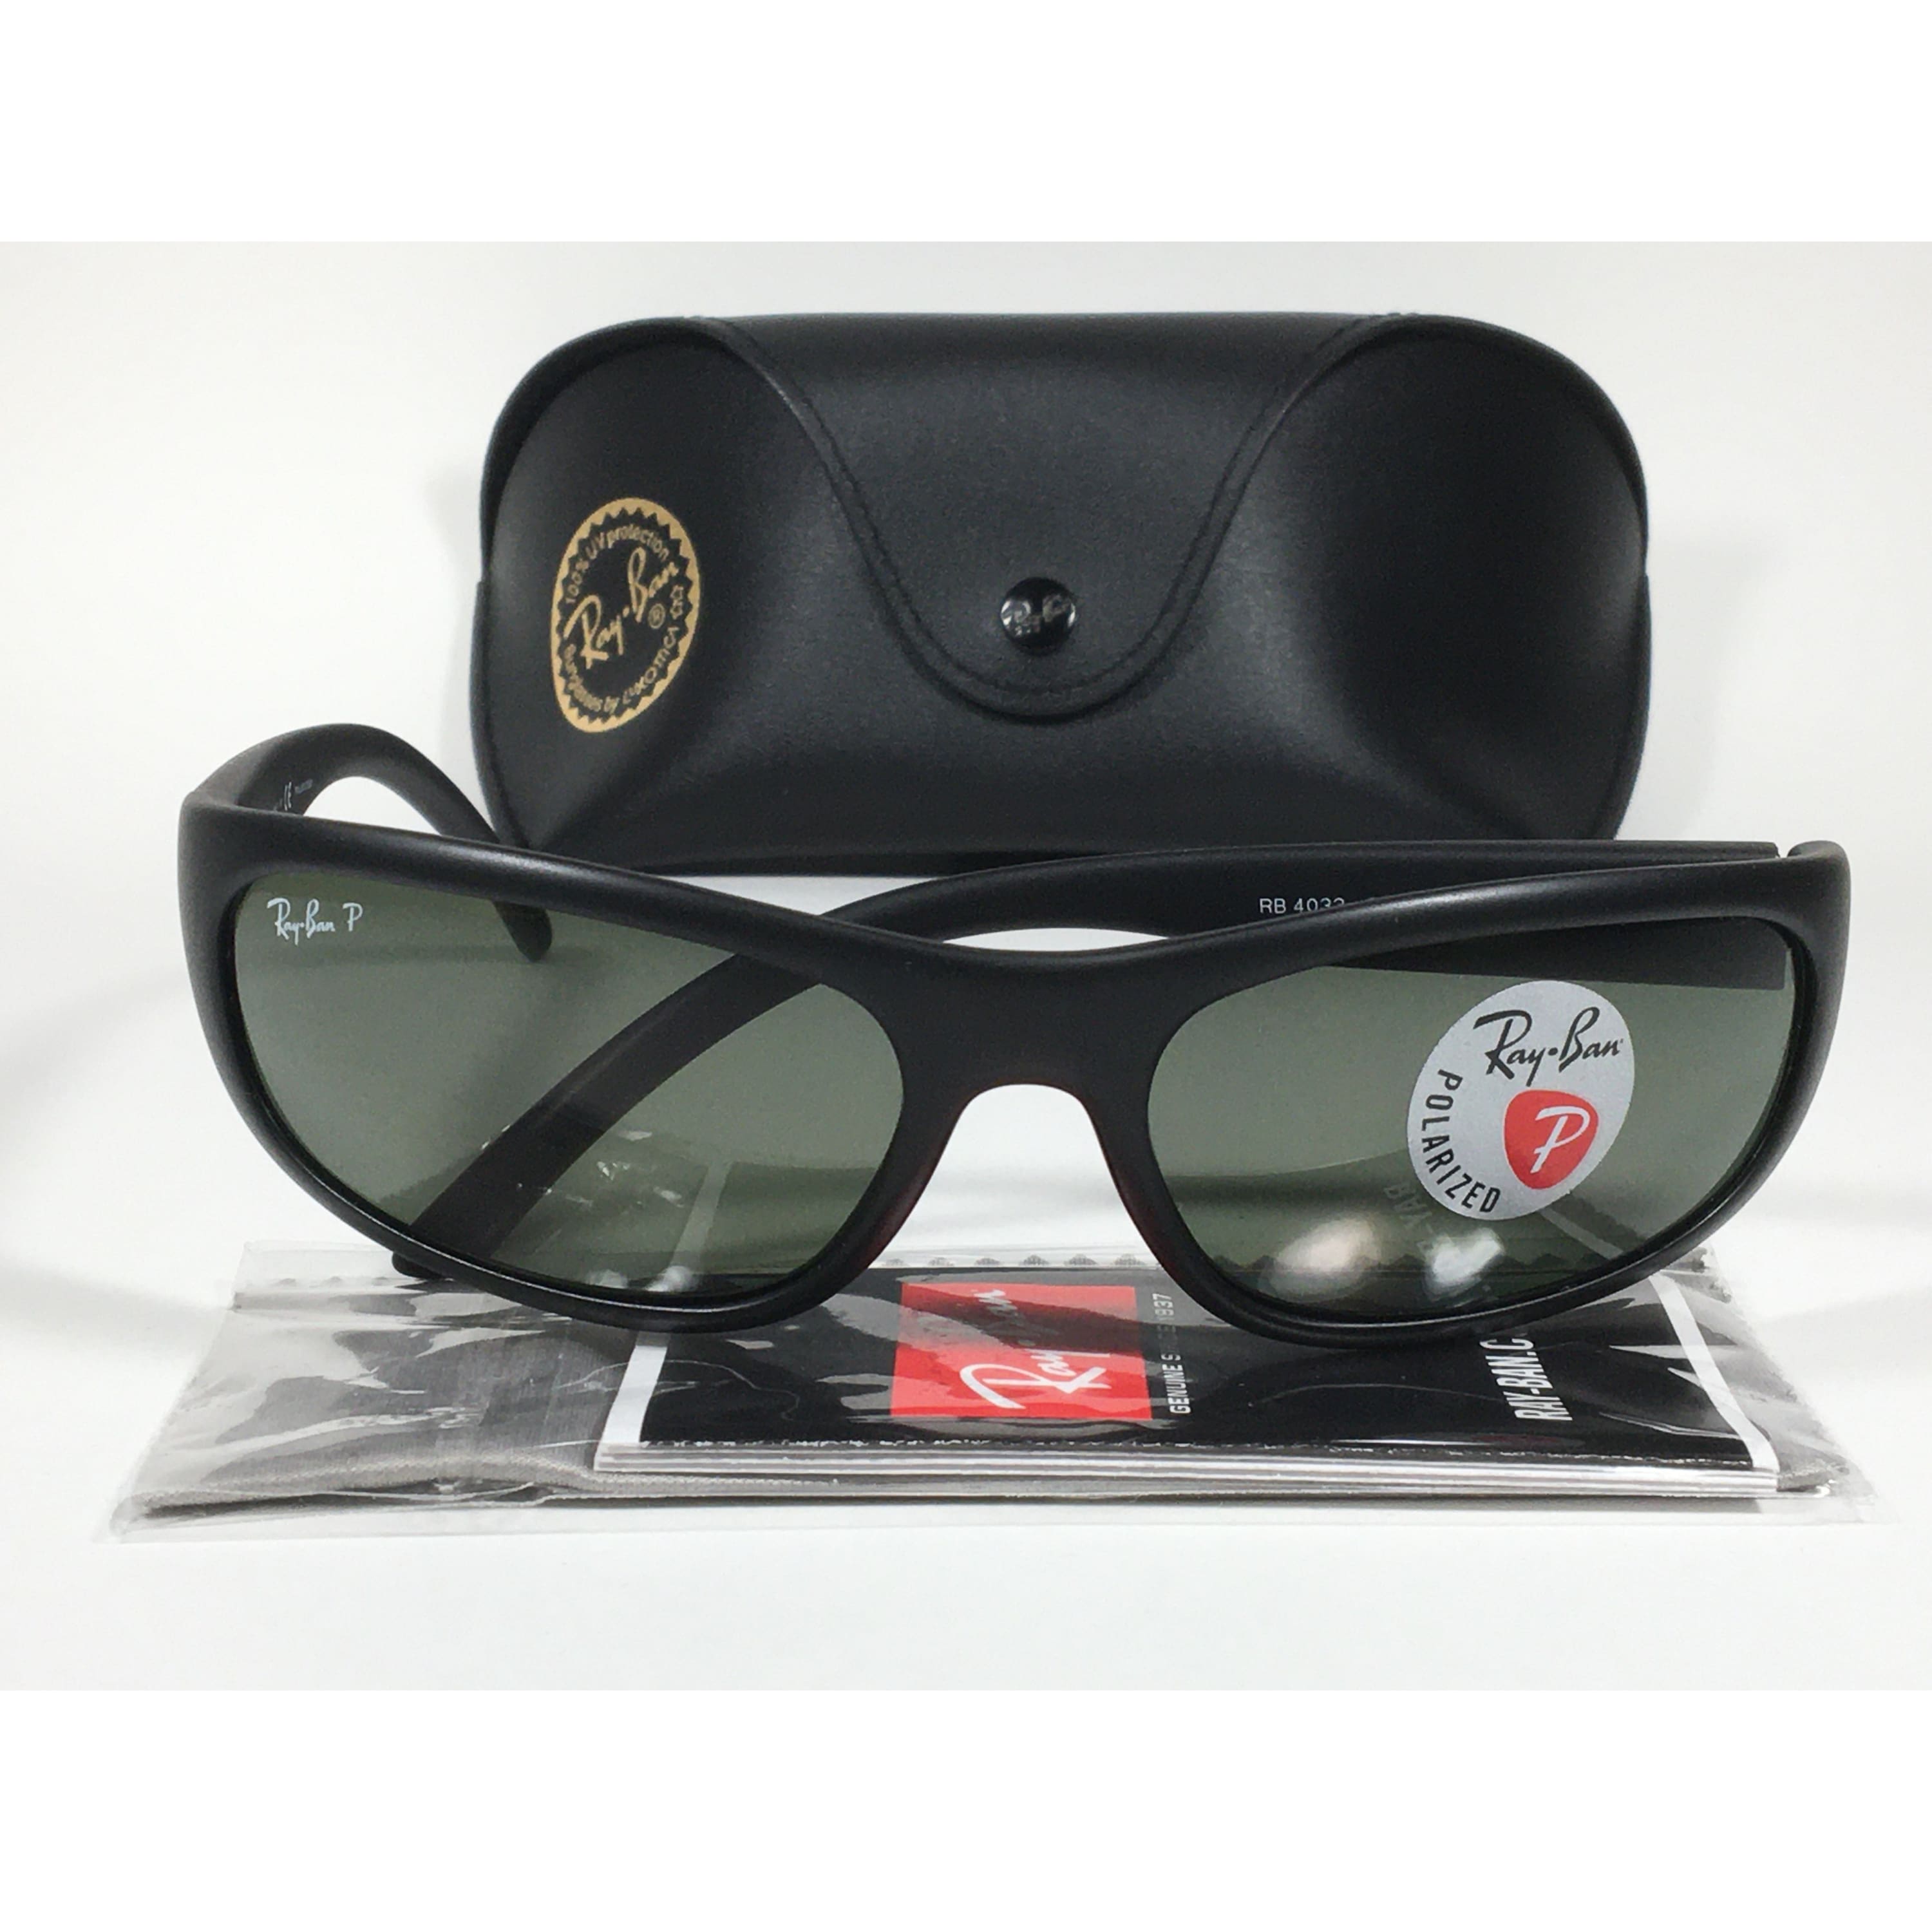 Ray Ban Predator Polarized Sunglasses Matte Black Green Lens Rb4033 60